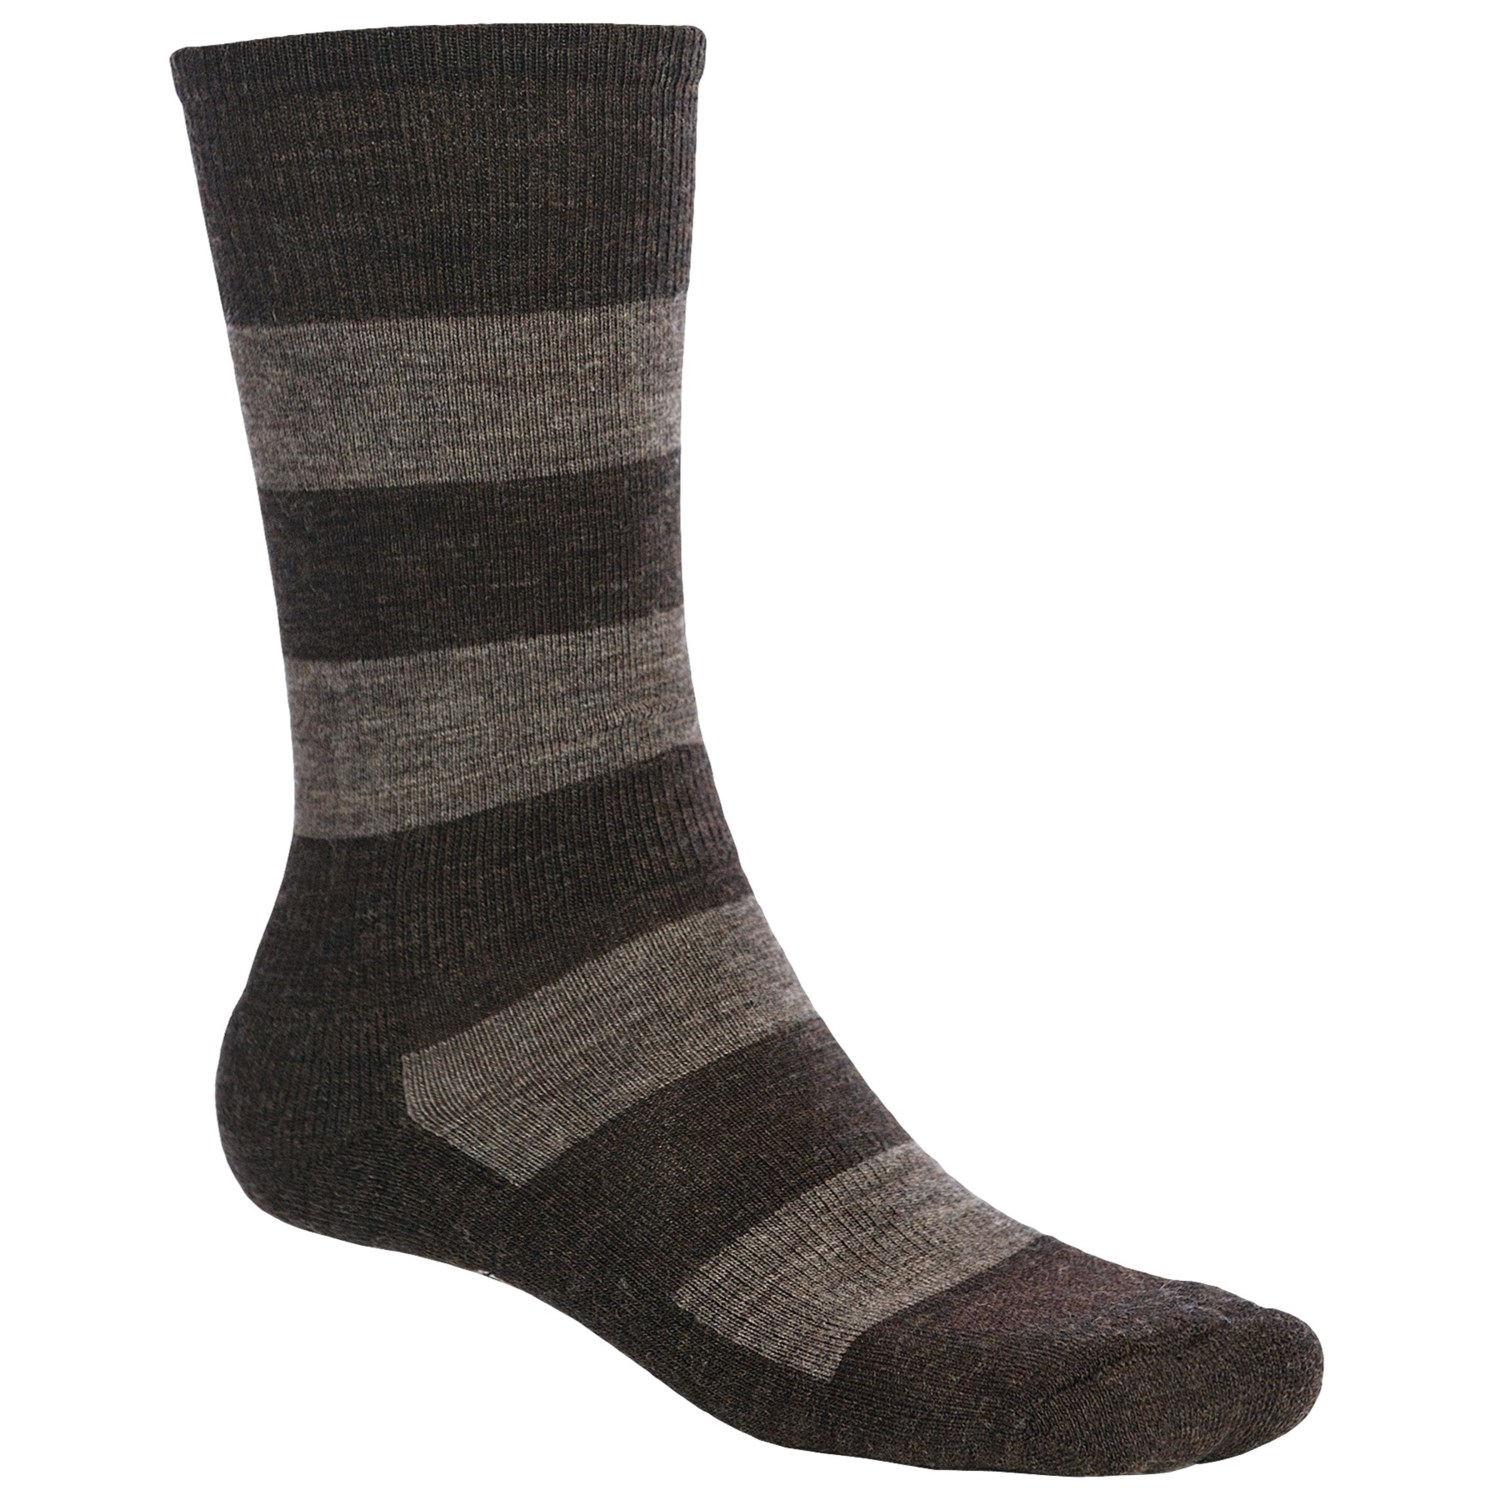  Double Insignia Socks  Merino Wool For Men in Chestnut Heather